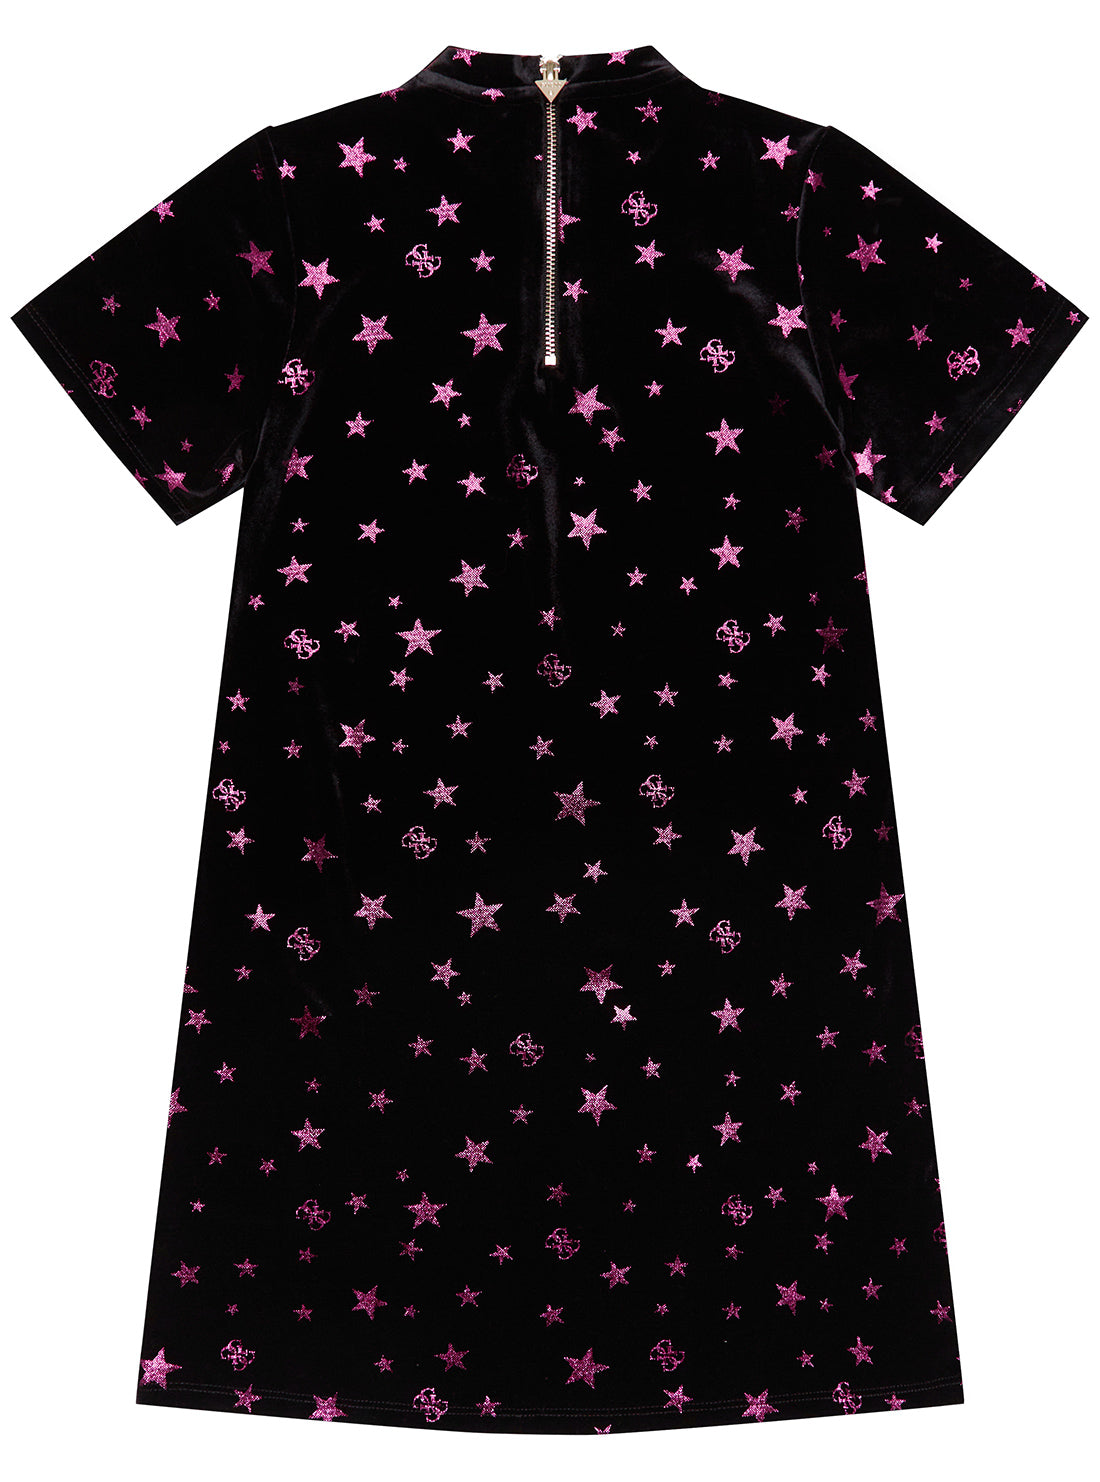 GUESS Black Star Print Short Sleeves Dress (2-7) back view